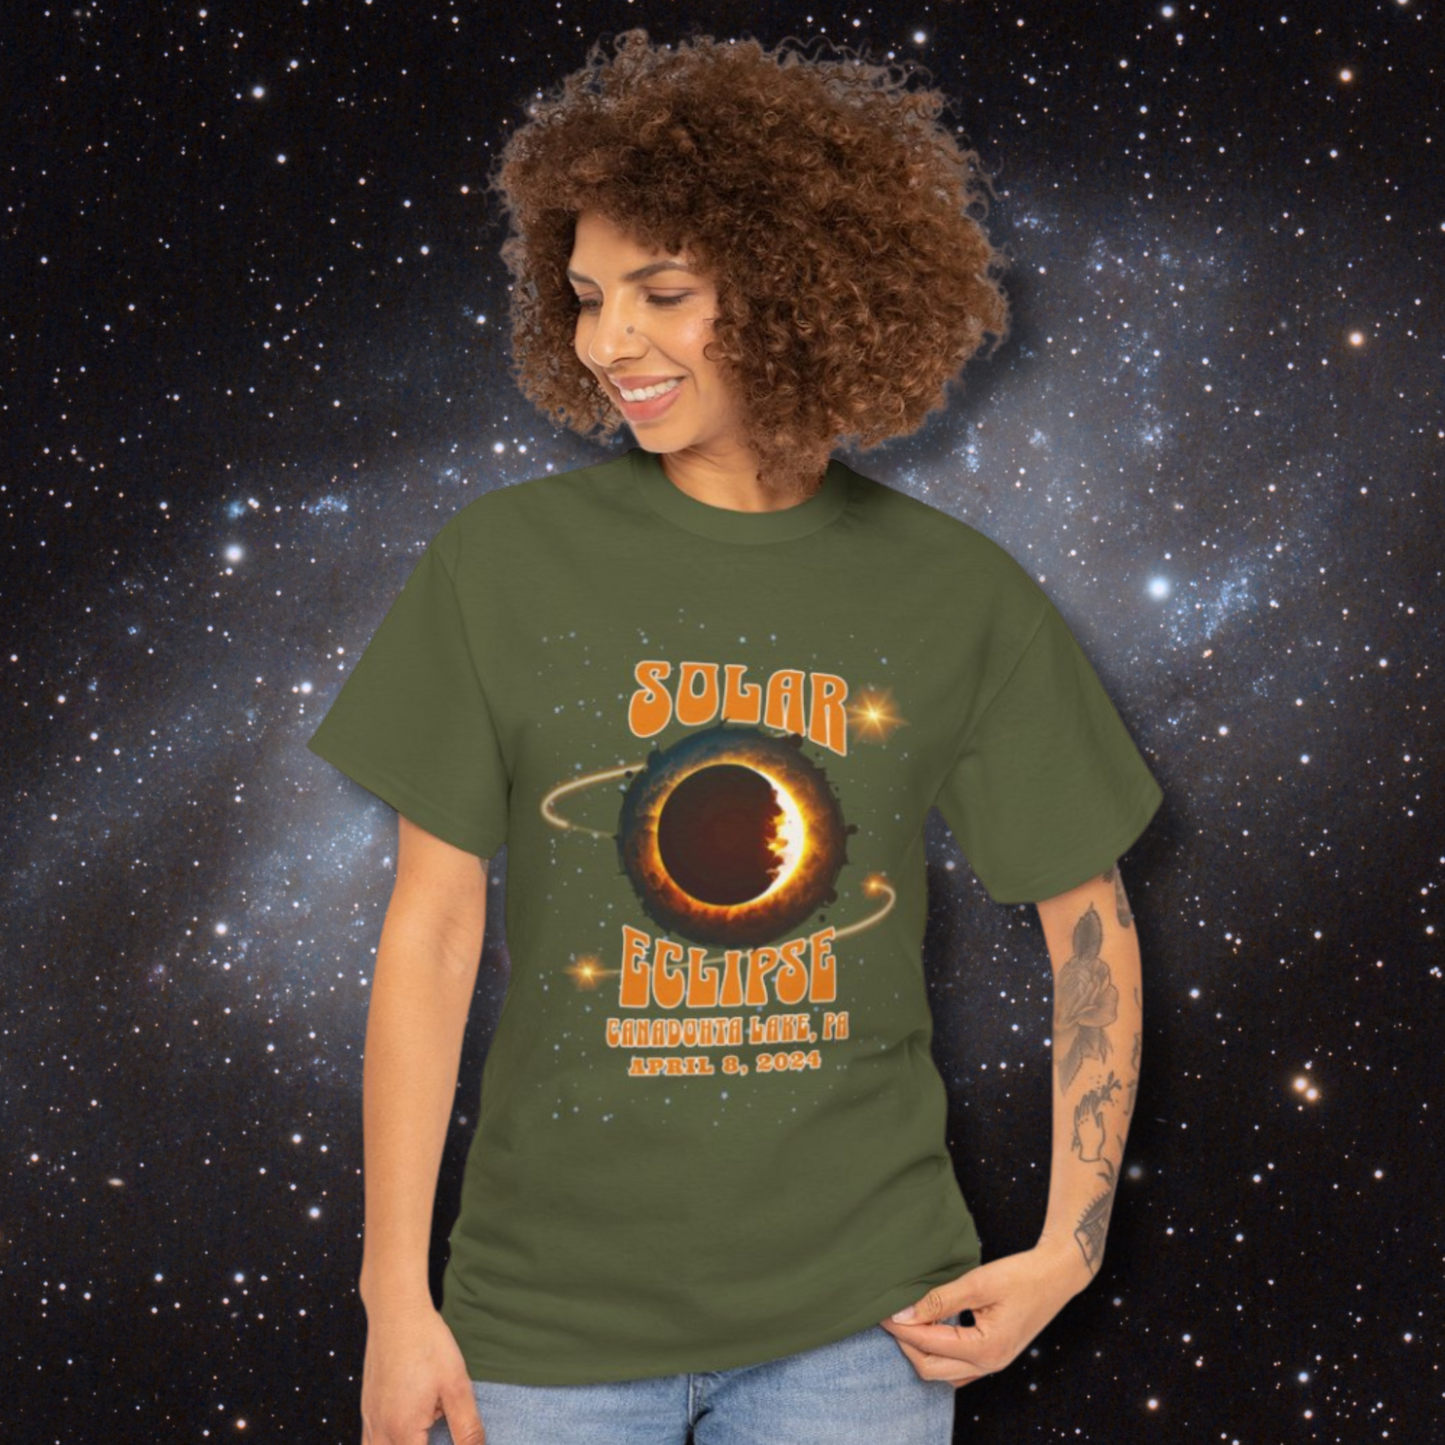 Solar Eclipse 2024 Commemorative Merch - Canadohta Lake, PA - Limited Edition T-Shirts